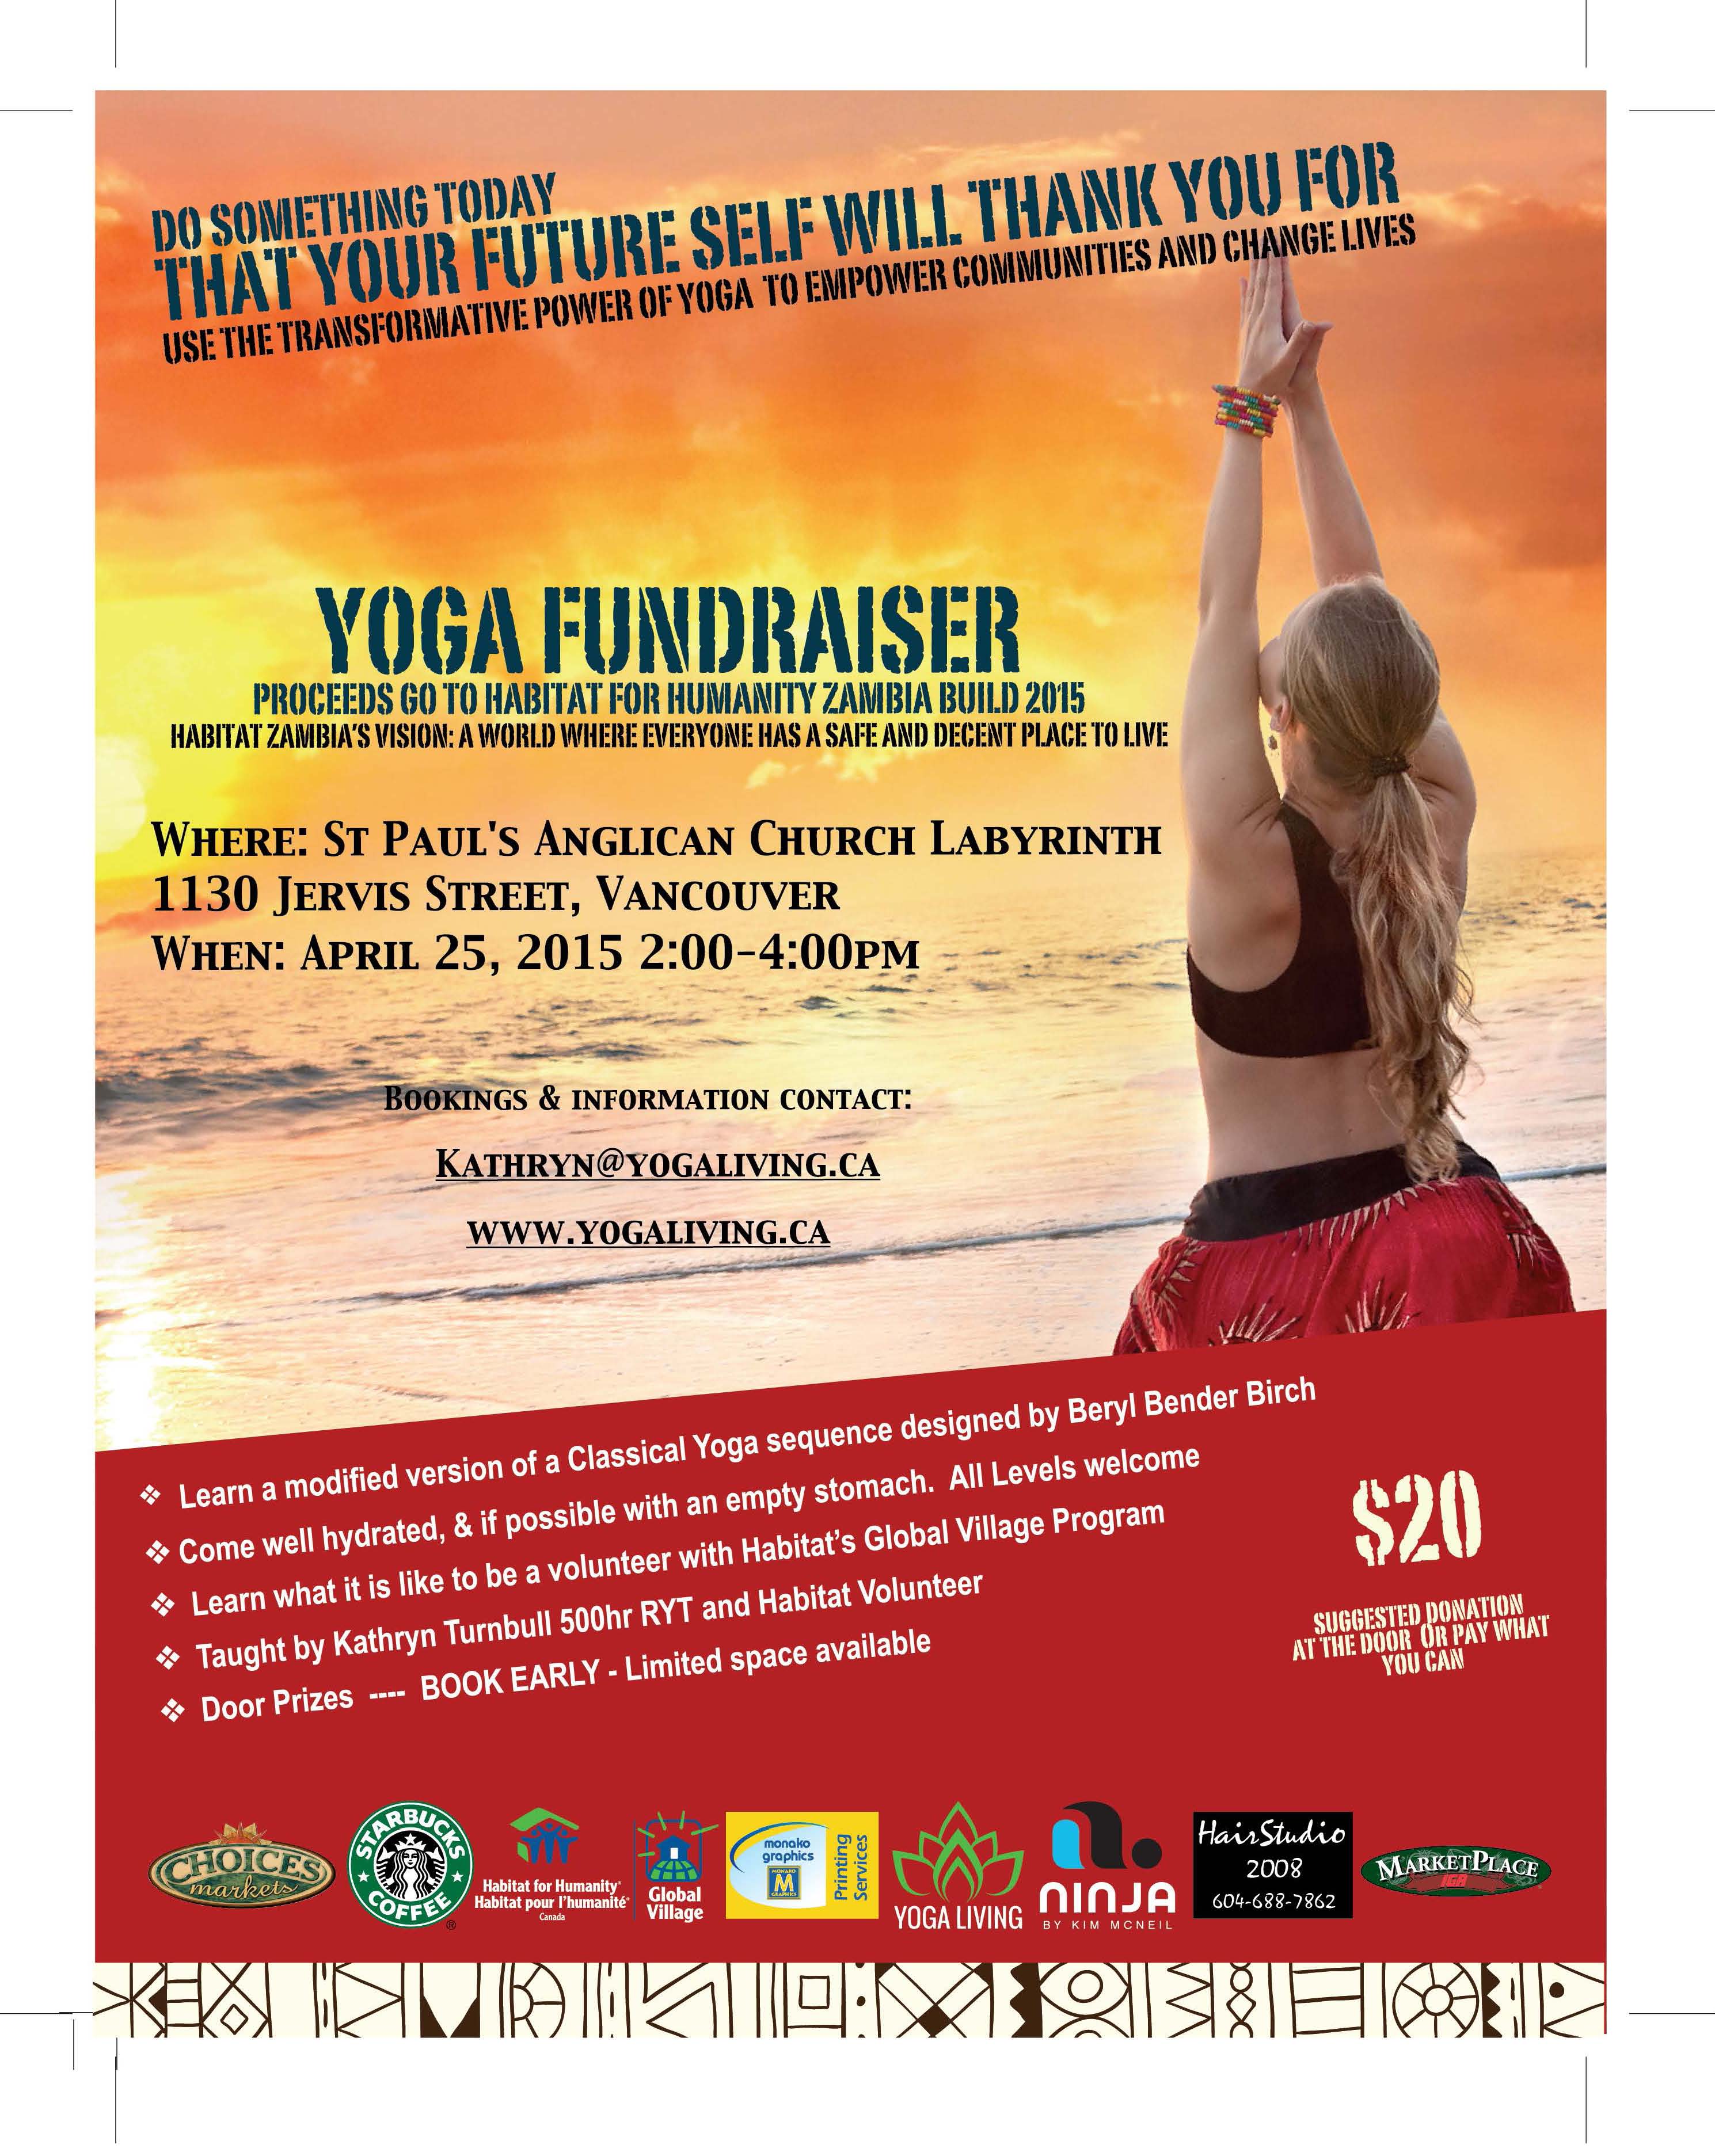 Yoga Fundraiser Transforming Lives Through Yoga 2015